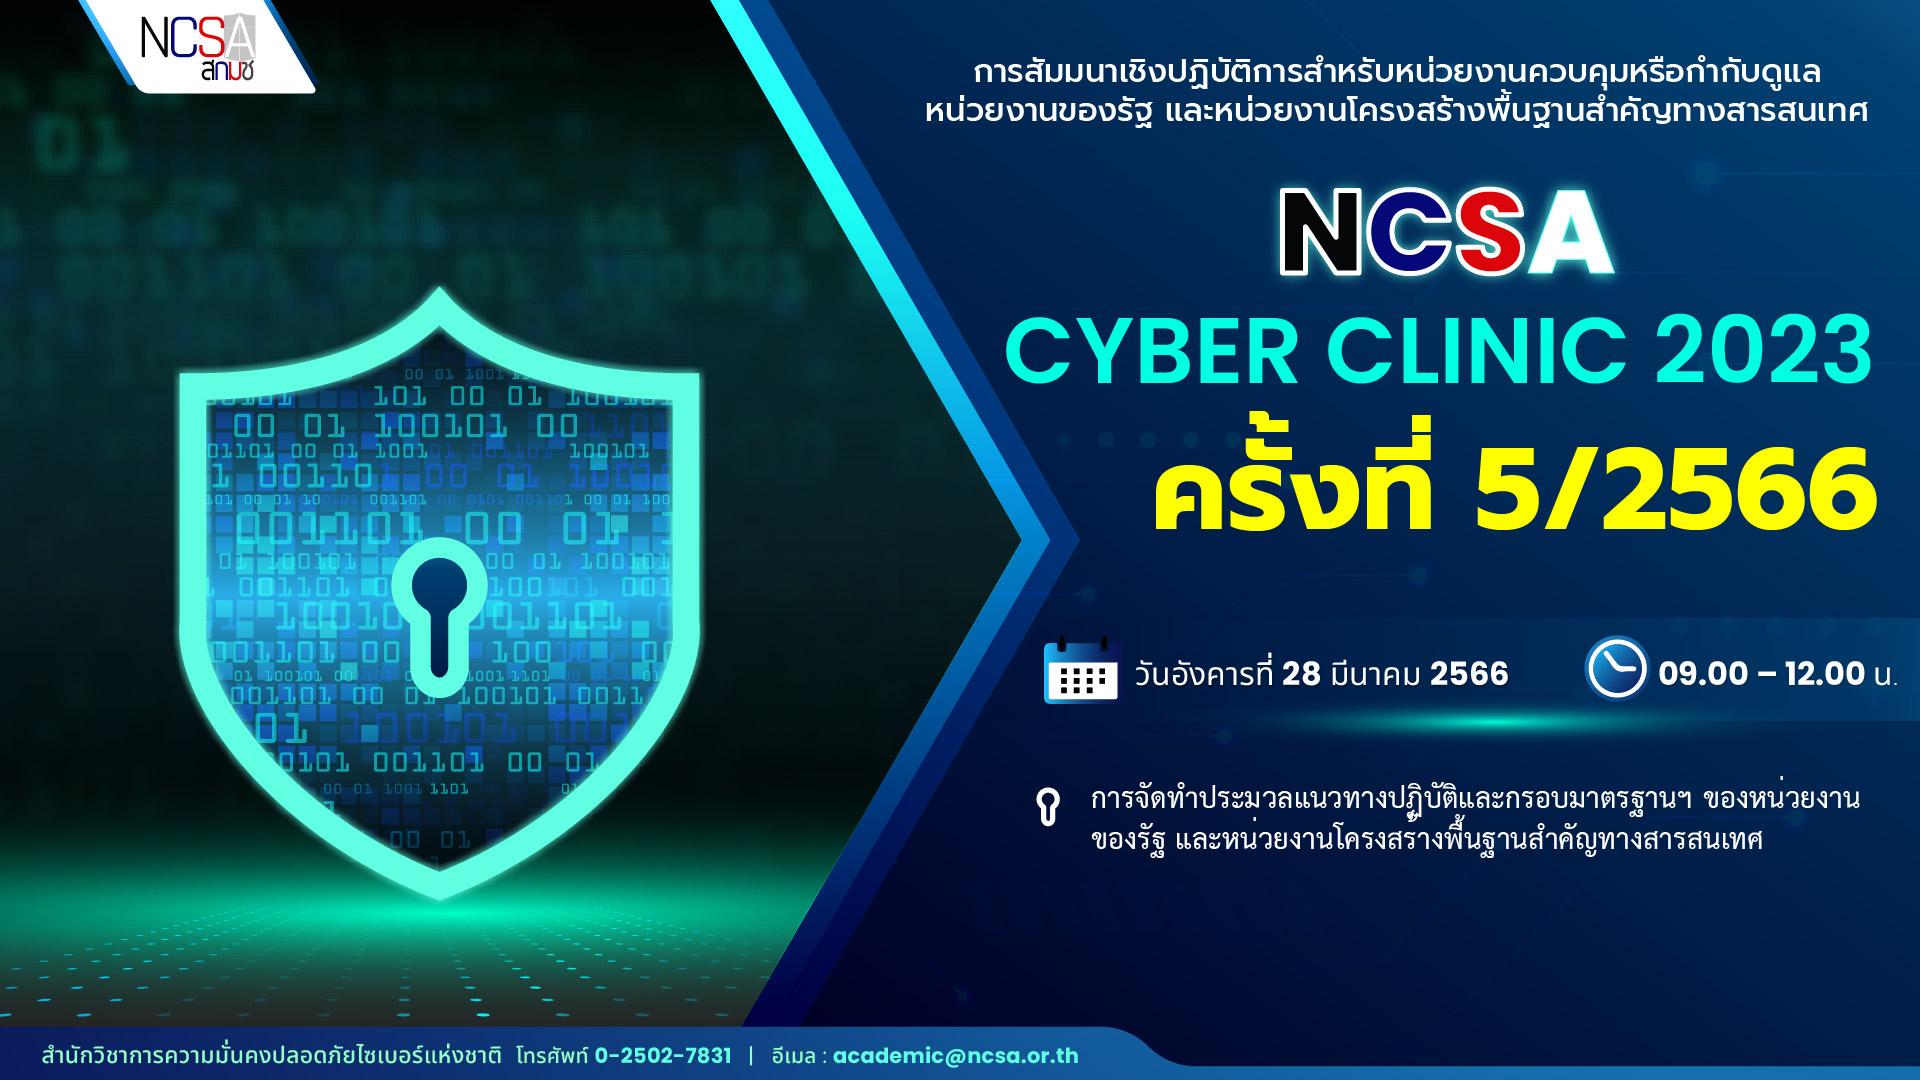 NCSA Cyber Clinic 2023 ครั้งที่ 5/2566